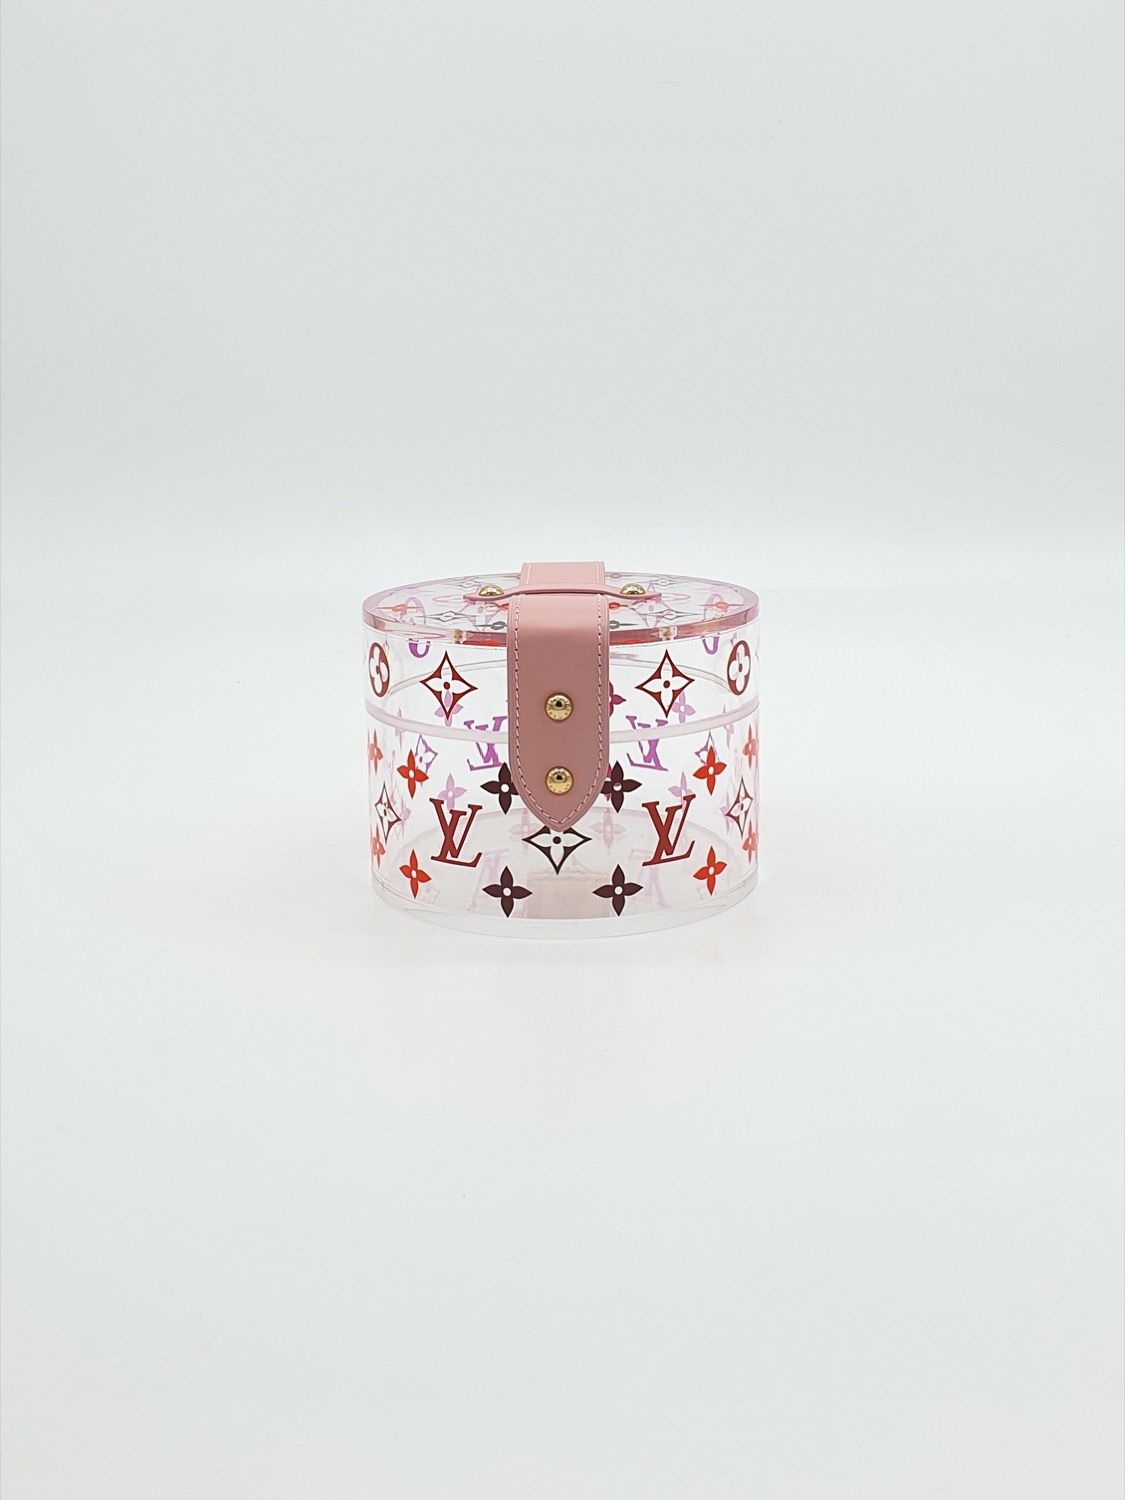 Louis Vuitton Monogram Plexiglass Scott Box - Clear Decorative